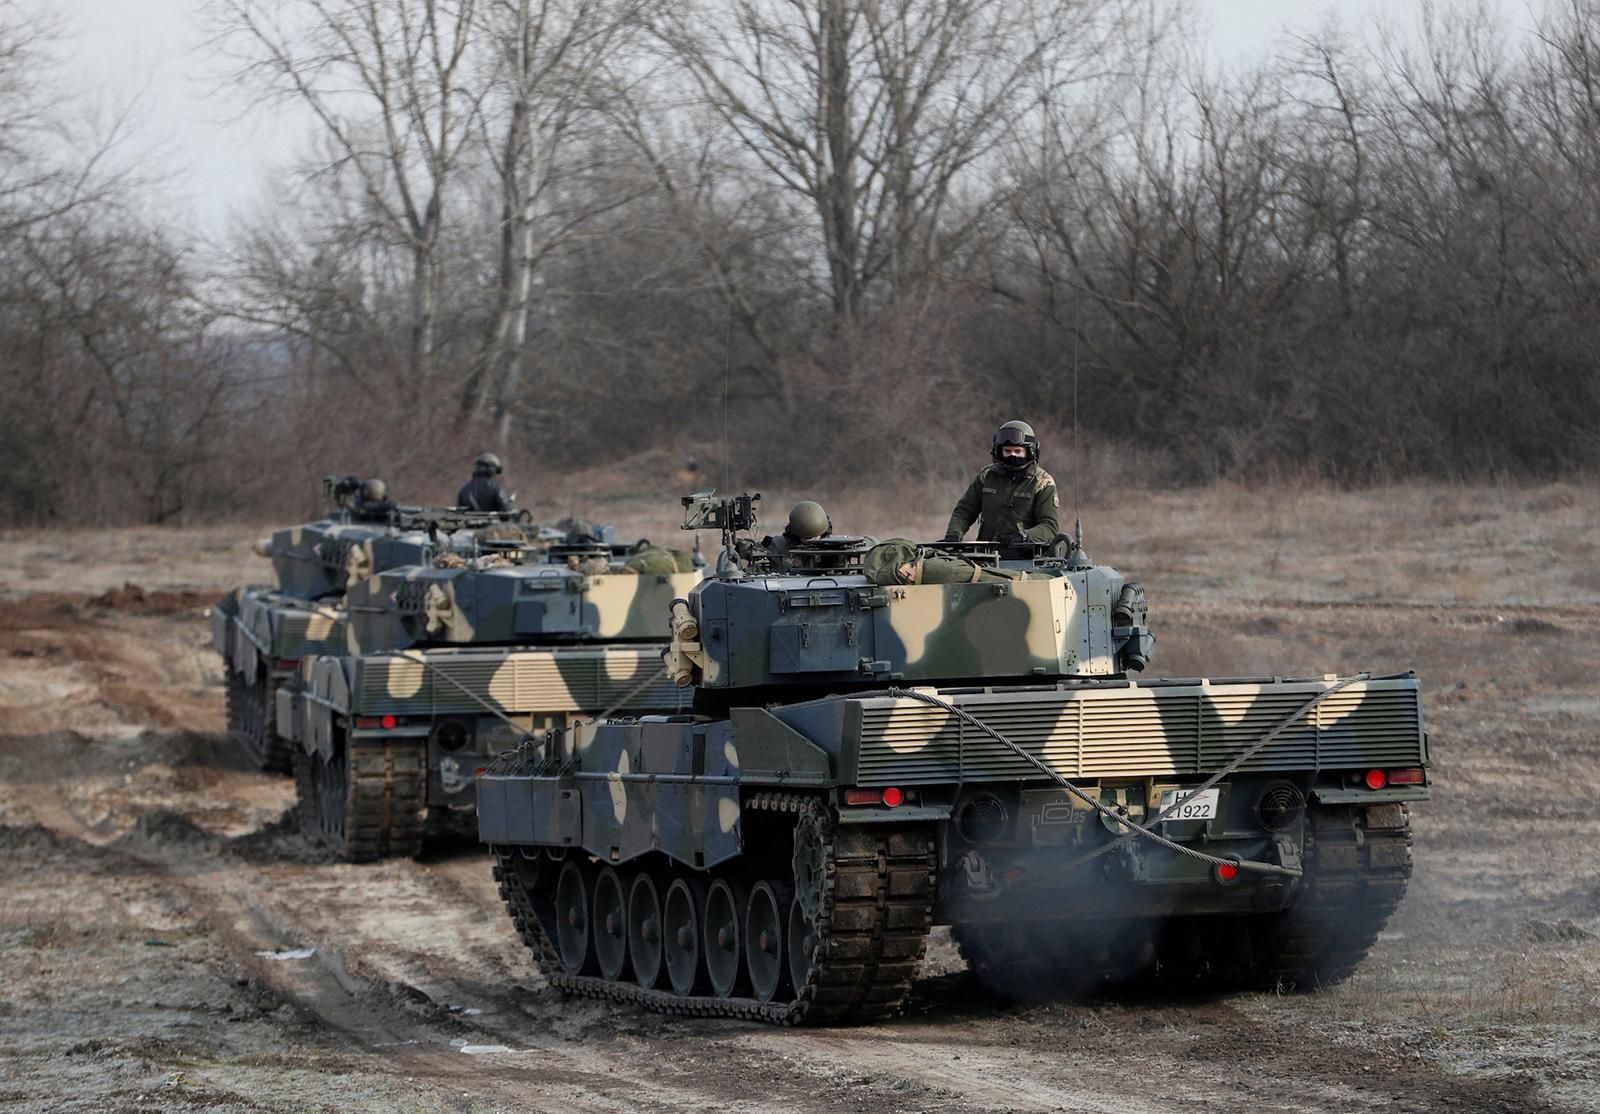 Leopard 2A4 tanks take part in a military training near Tata, Hungary, February 6.